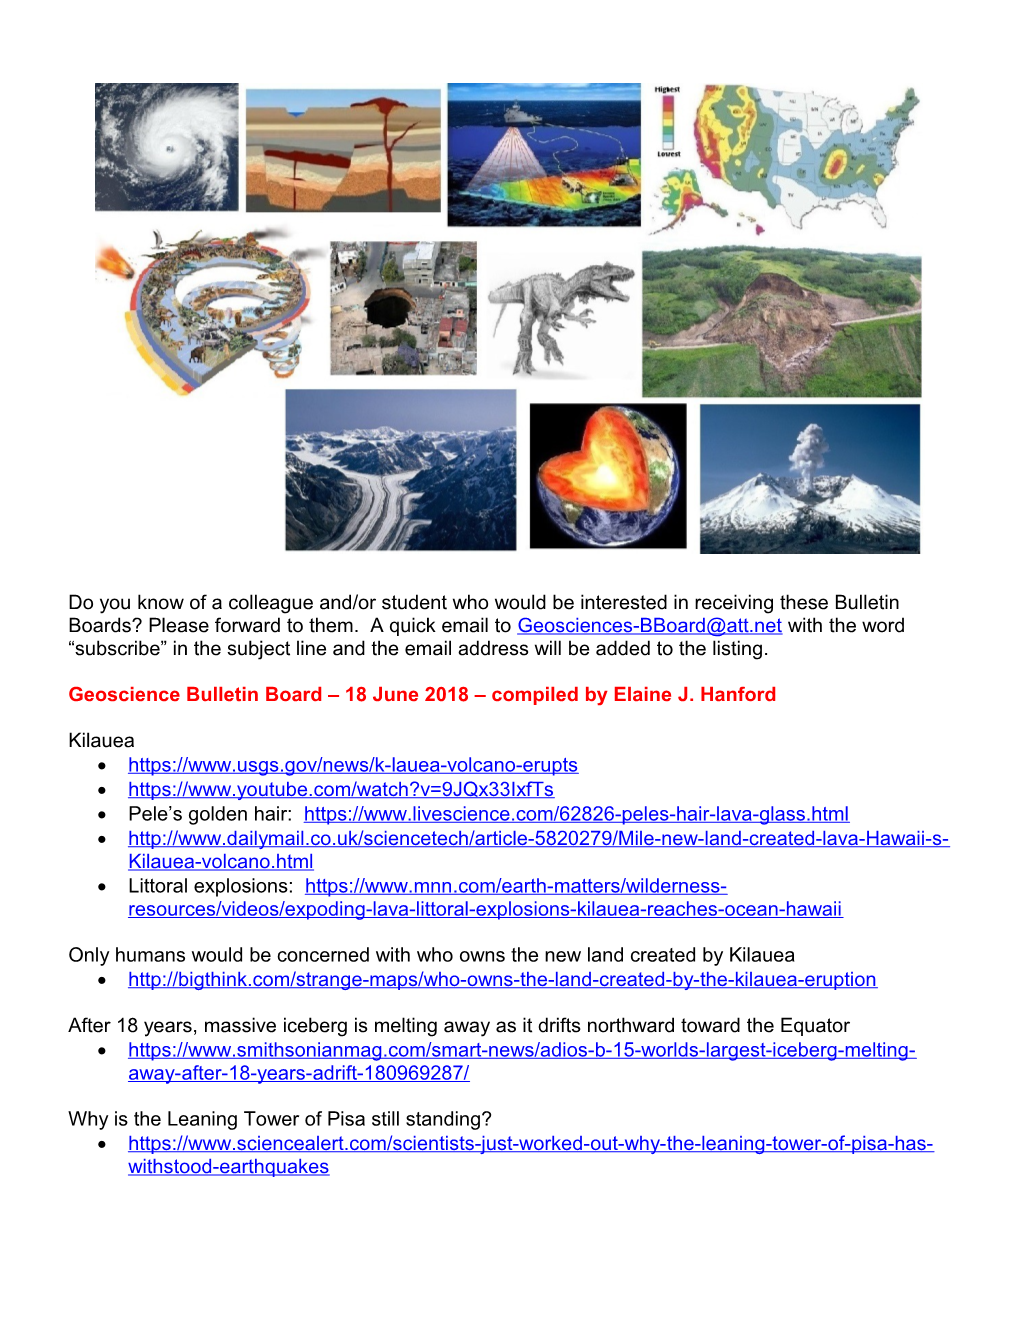 Geoscience Bulletin Board 18 June 2018 Compiled by Elaine J. Hanford